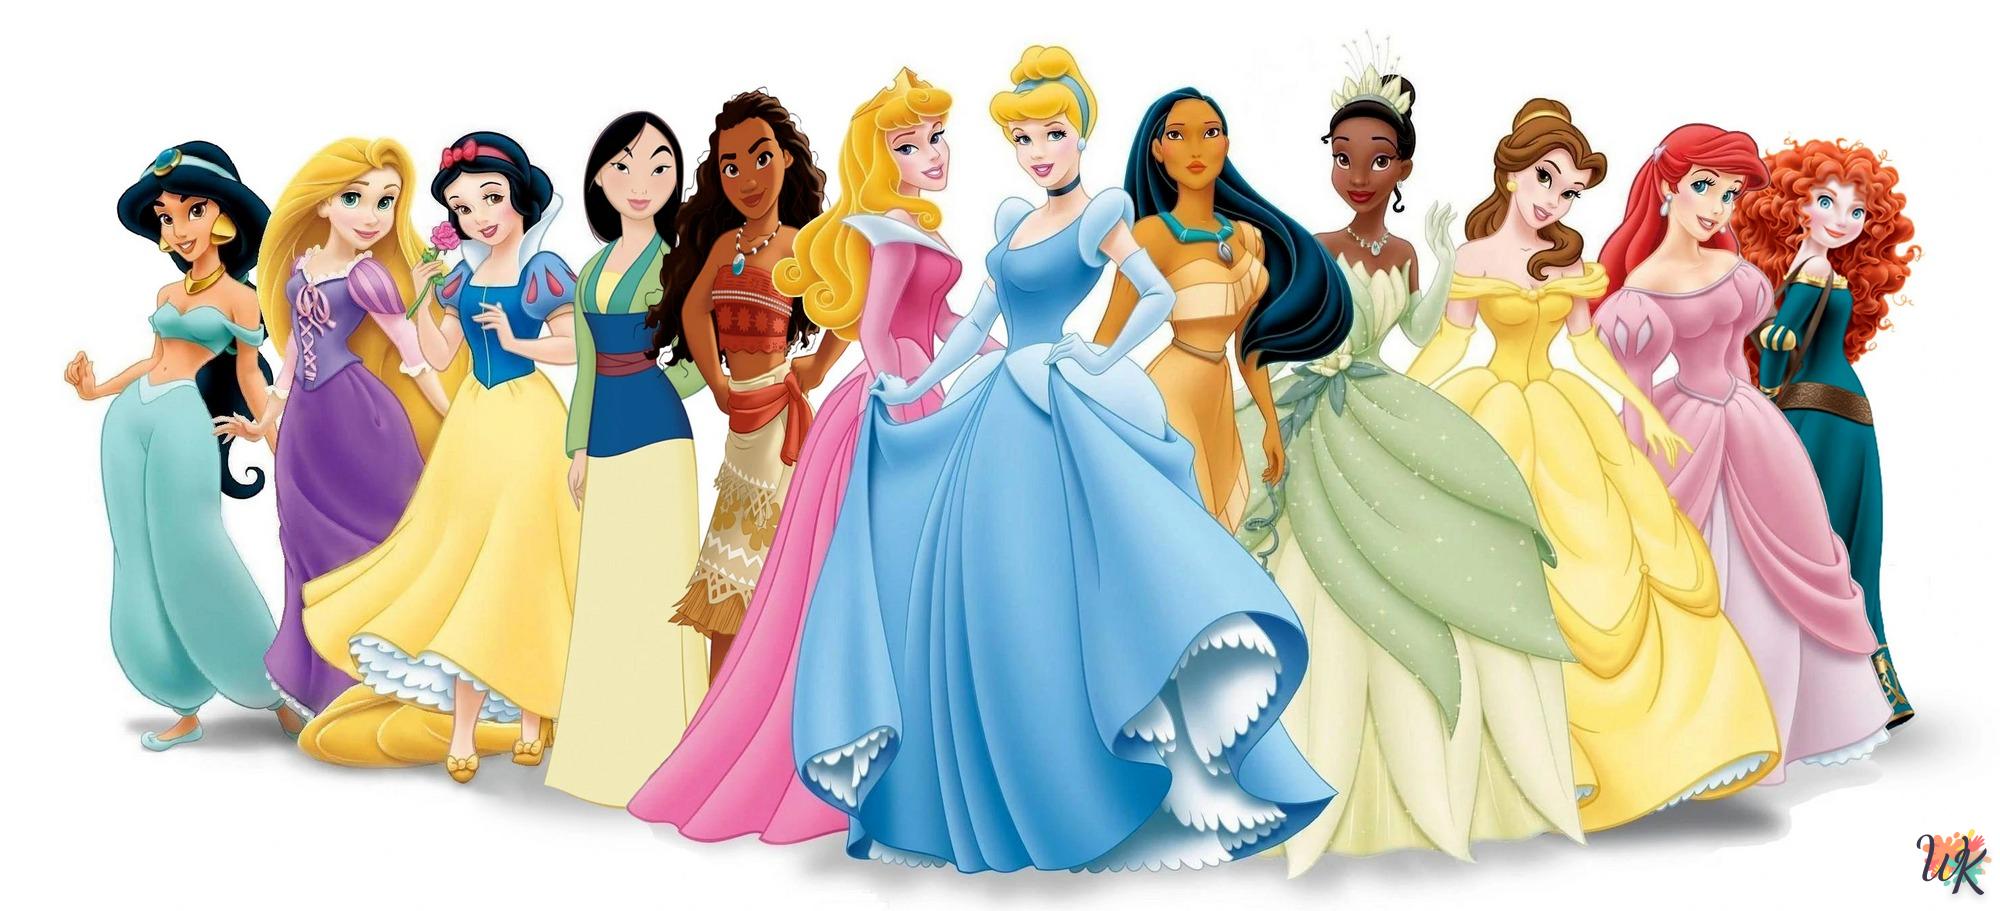 33 Disney Princesses coloring pages